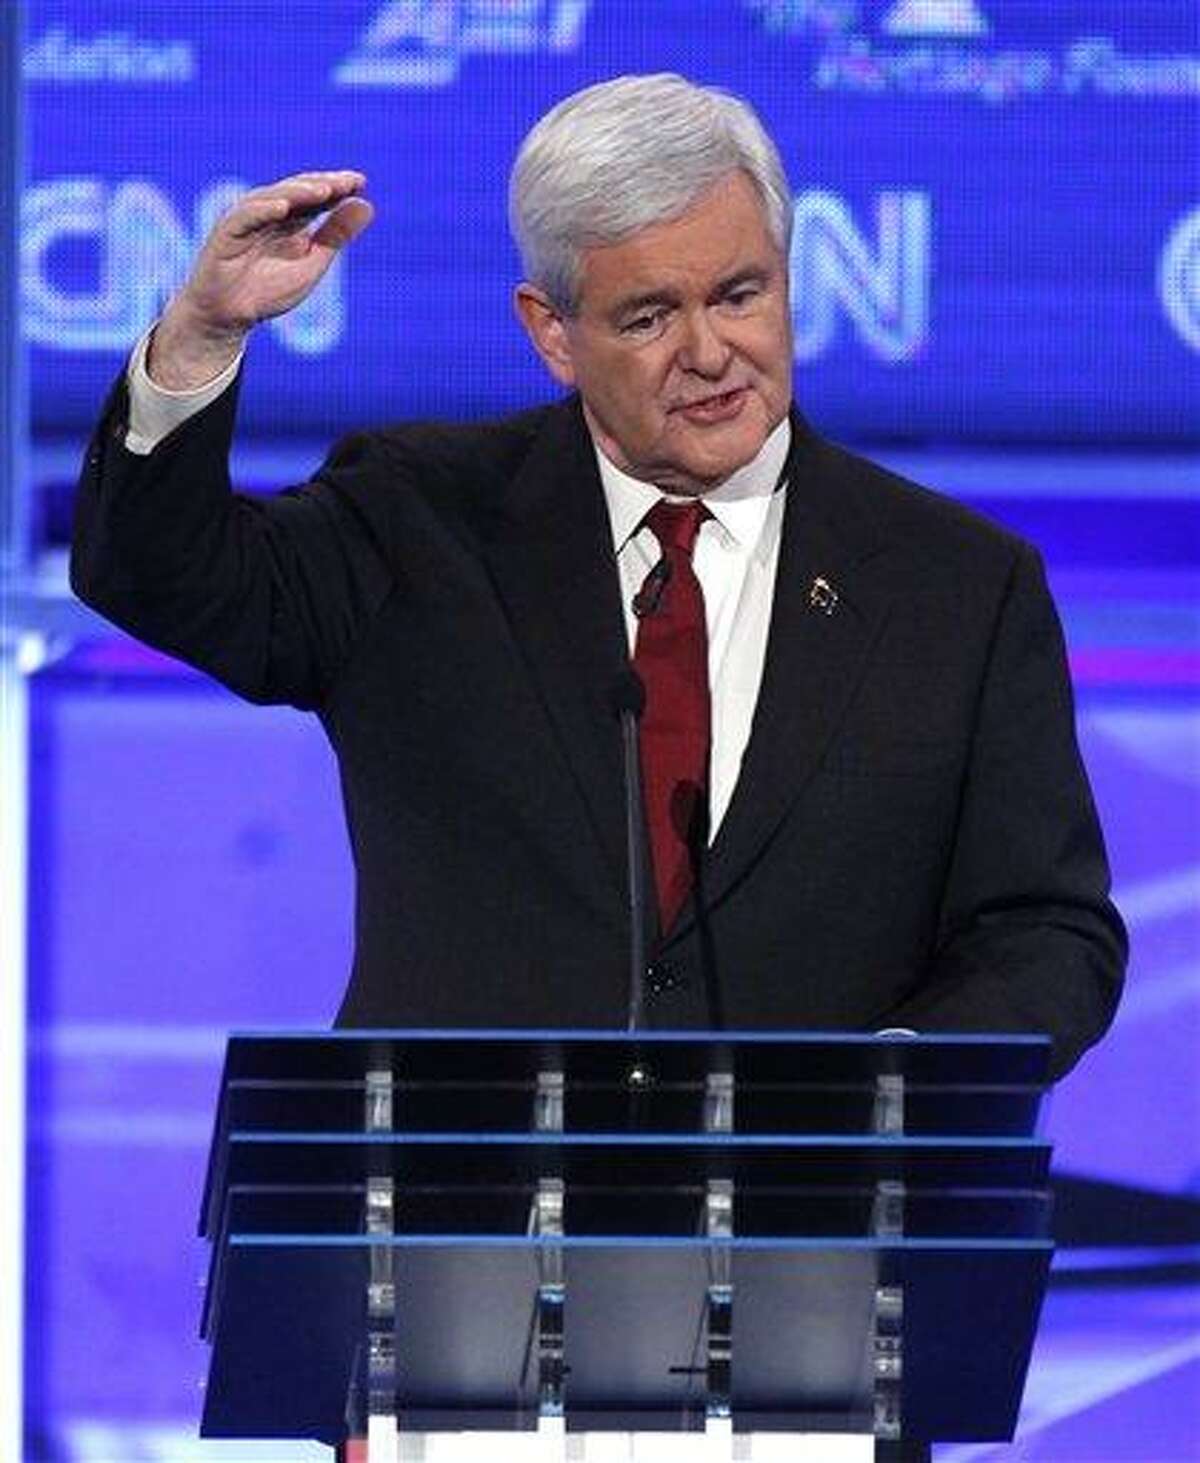 Republican presidential candidate former House Speaker Newt Gingrich speaks at a Republican presidential debate in Washington, Tuesday, Nov. 22, 2011. (AP Photo/Evan Vucci)